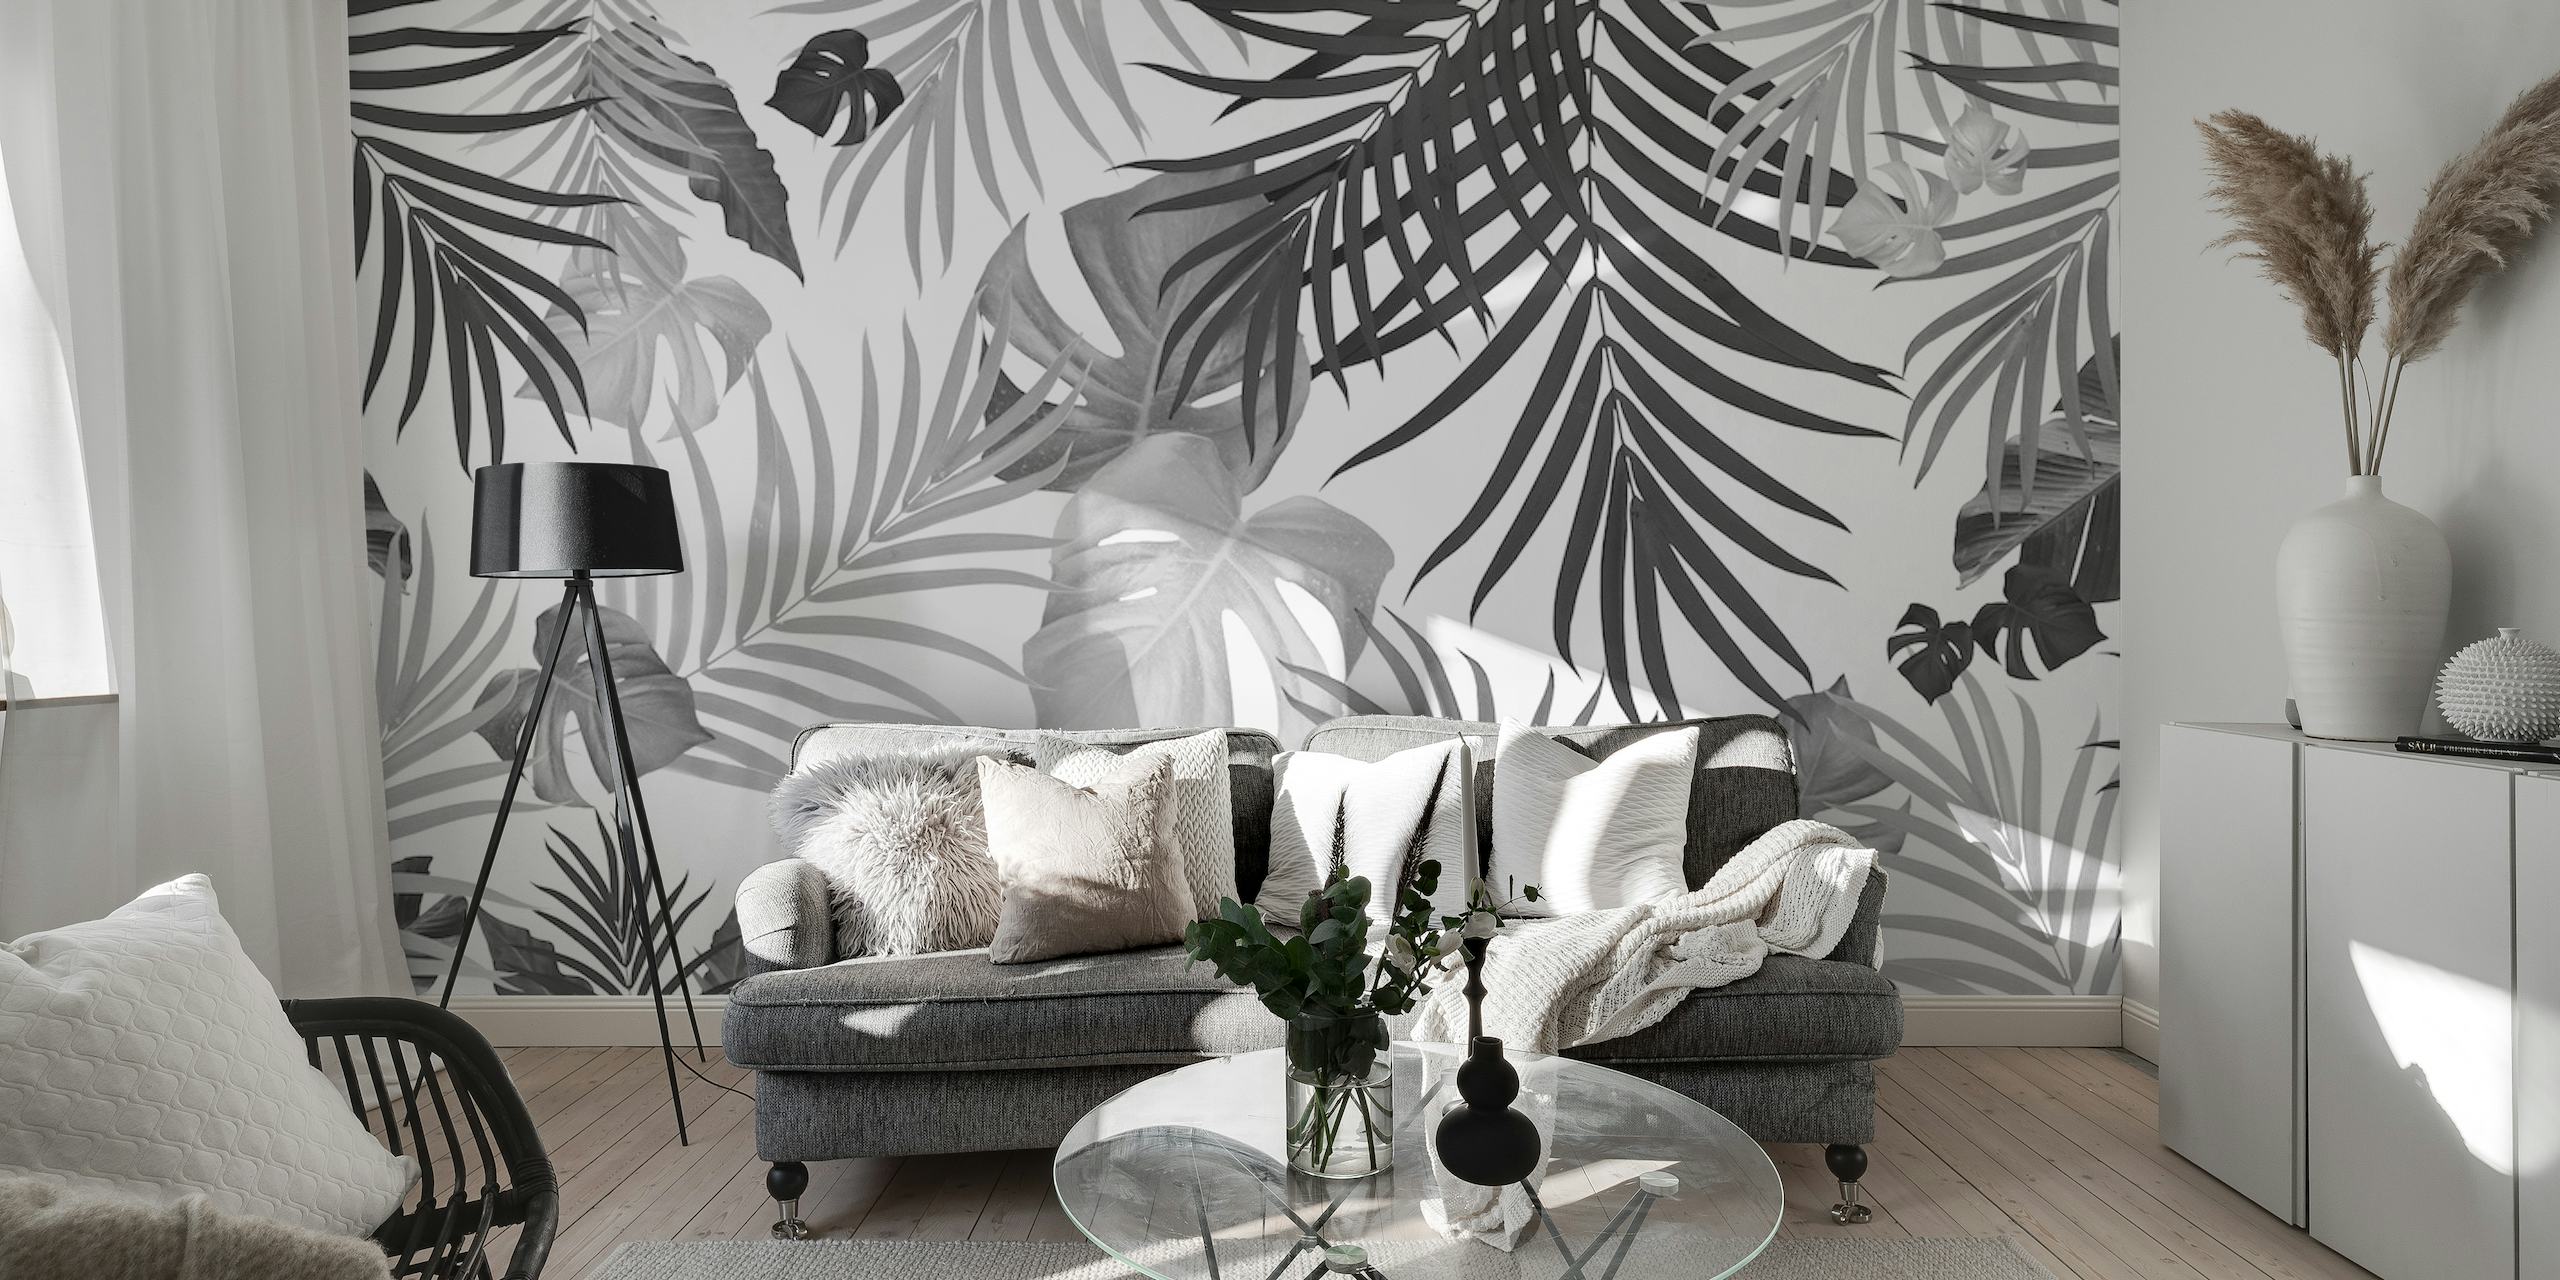 Monochrome tropical jungle leaves wall mural for interior decor